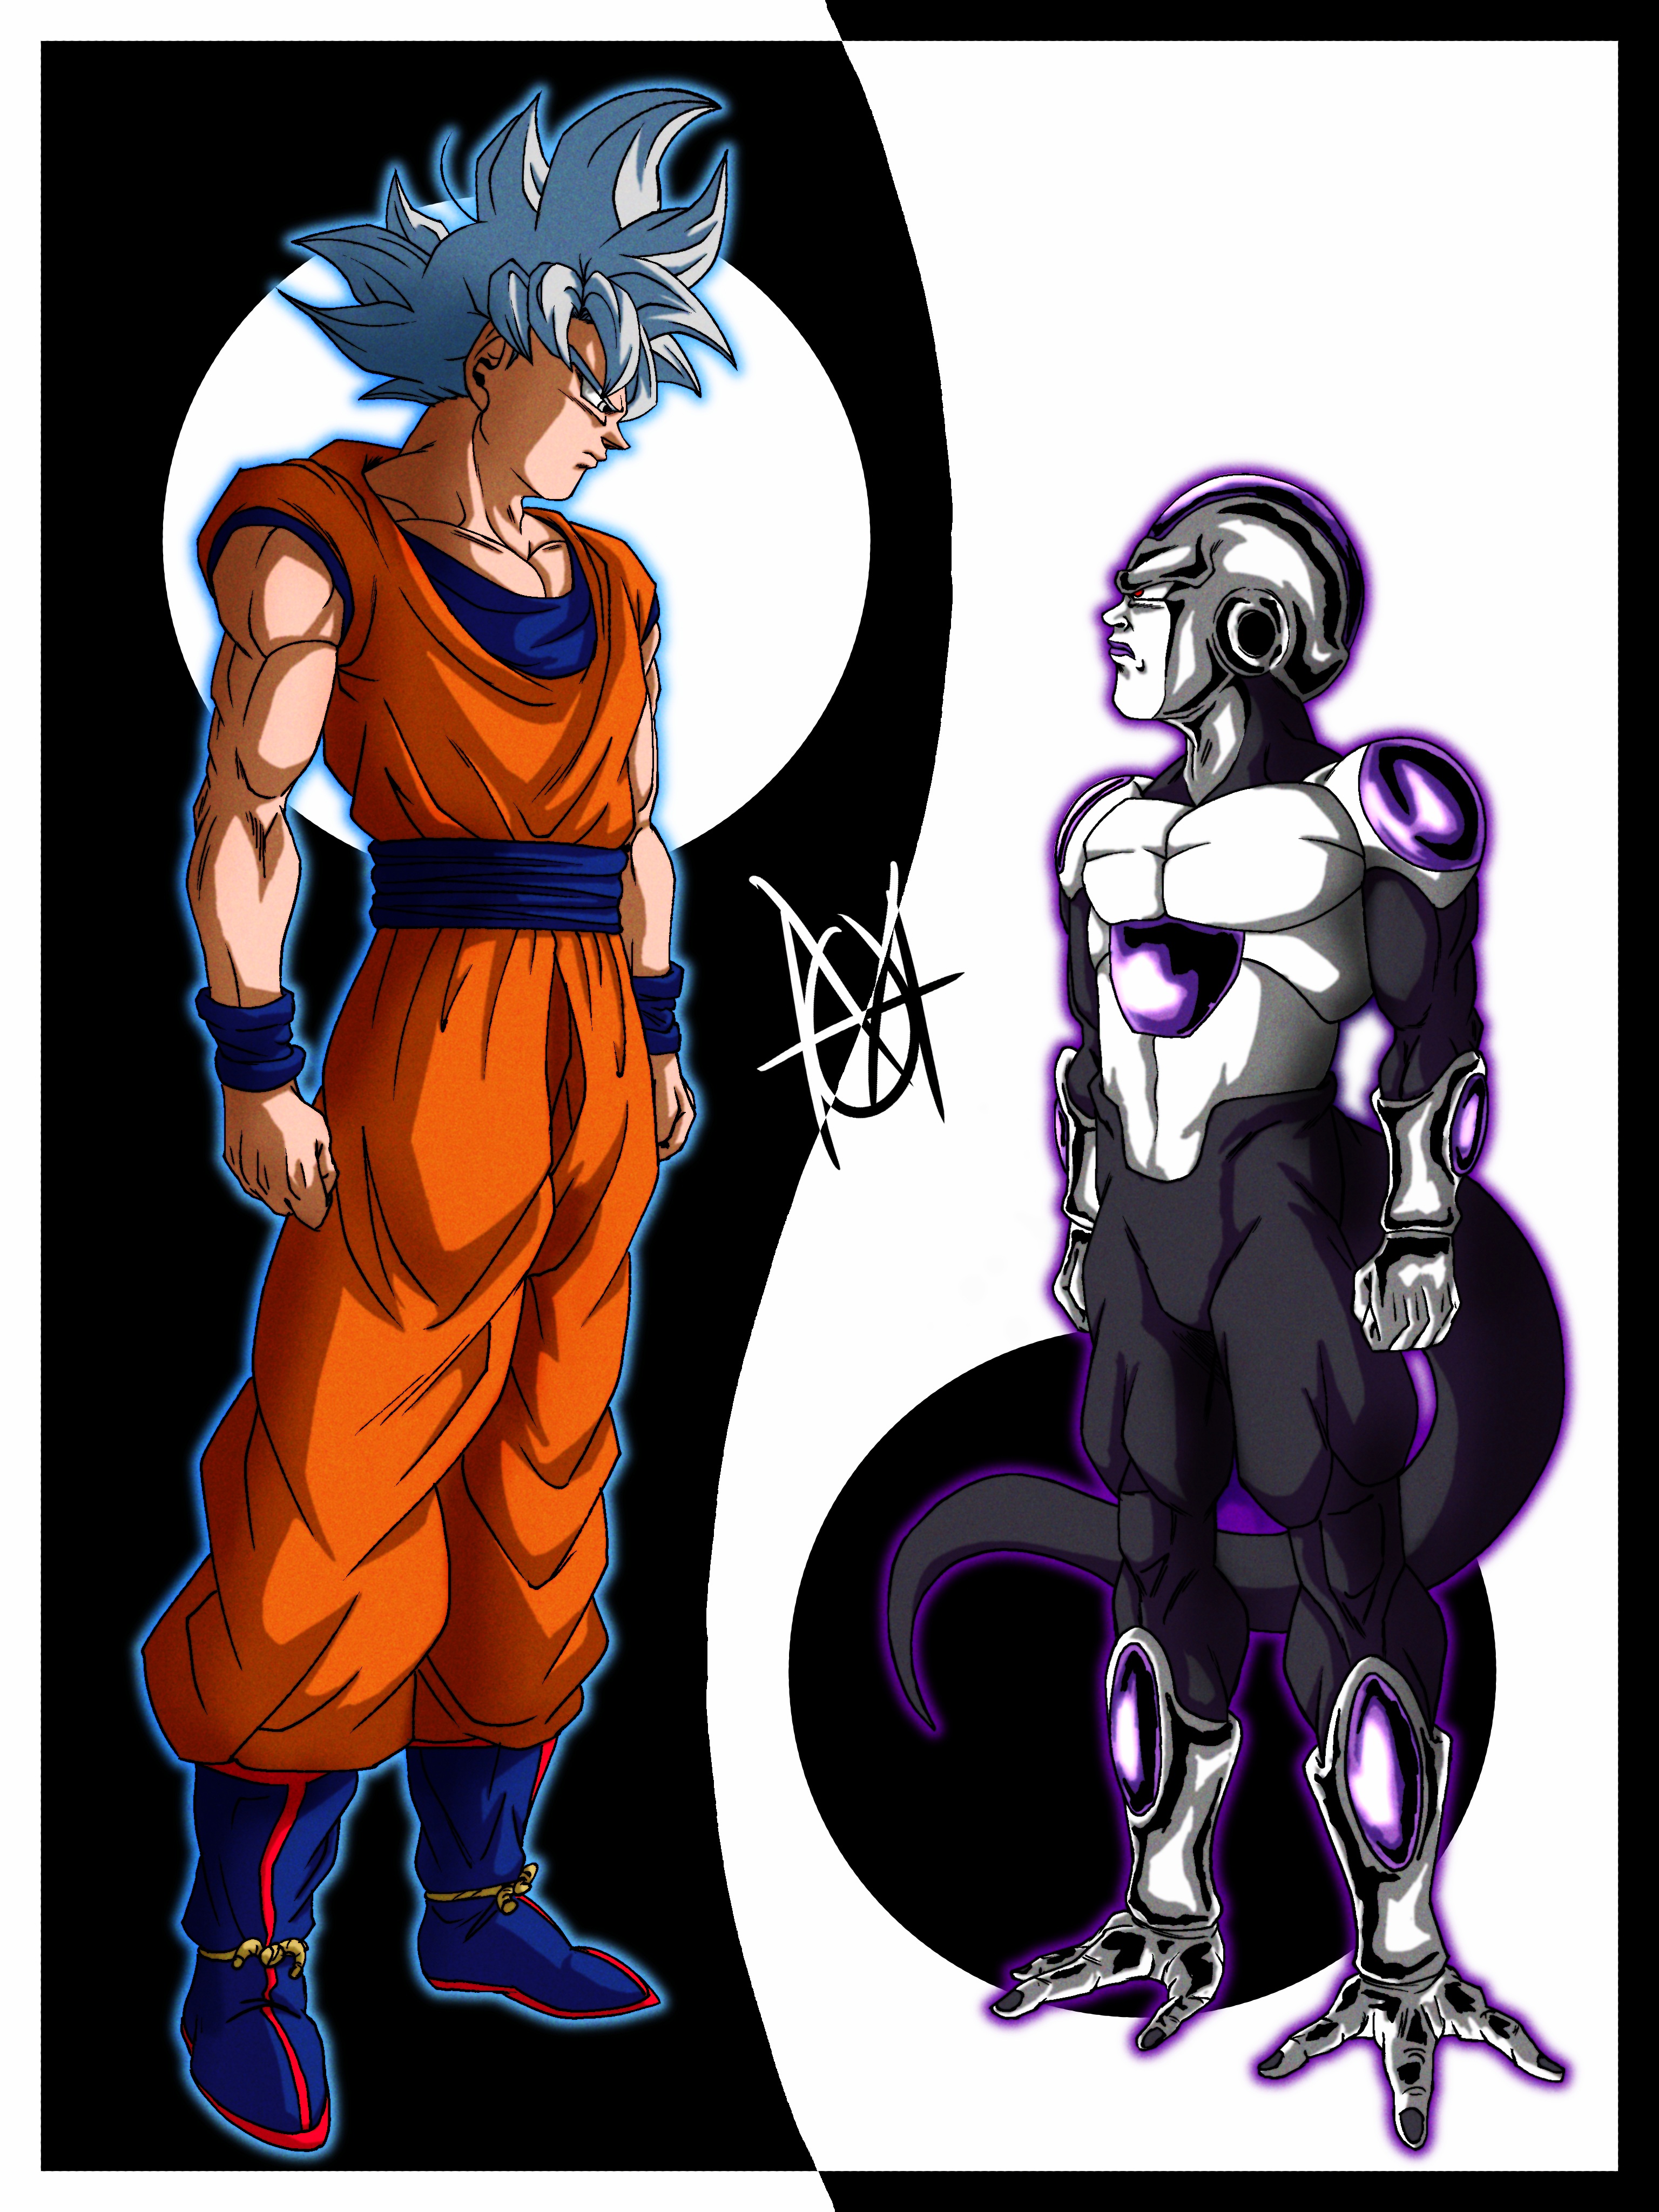 Goku vs Frost (Dragon Ball Super #09) by Tavares2598 on DeviantArt